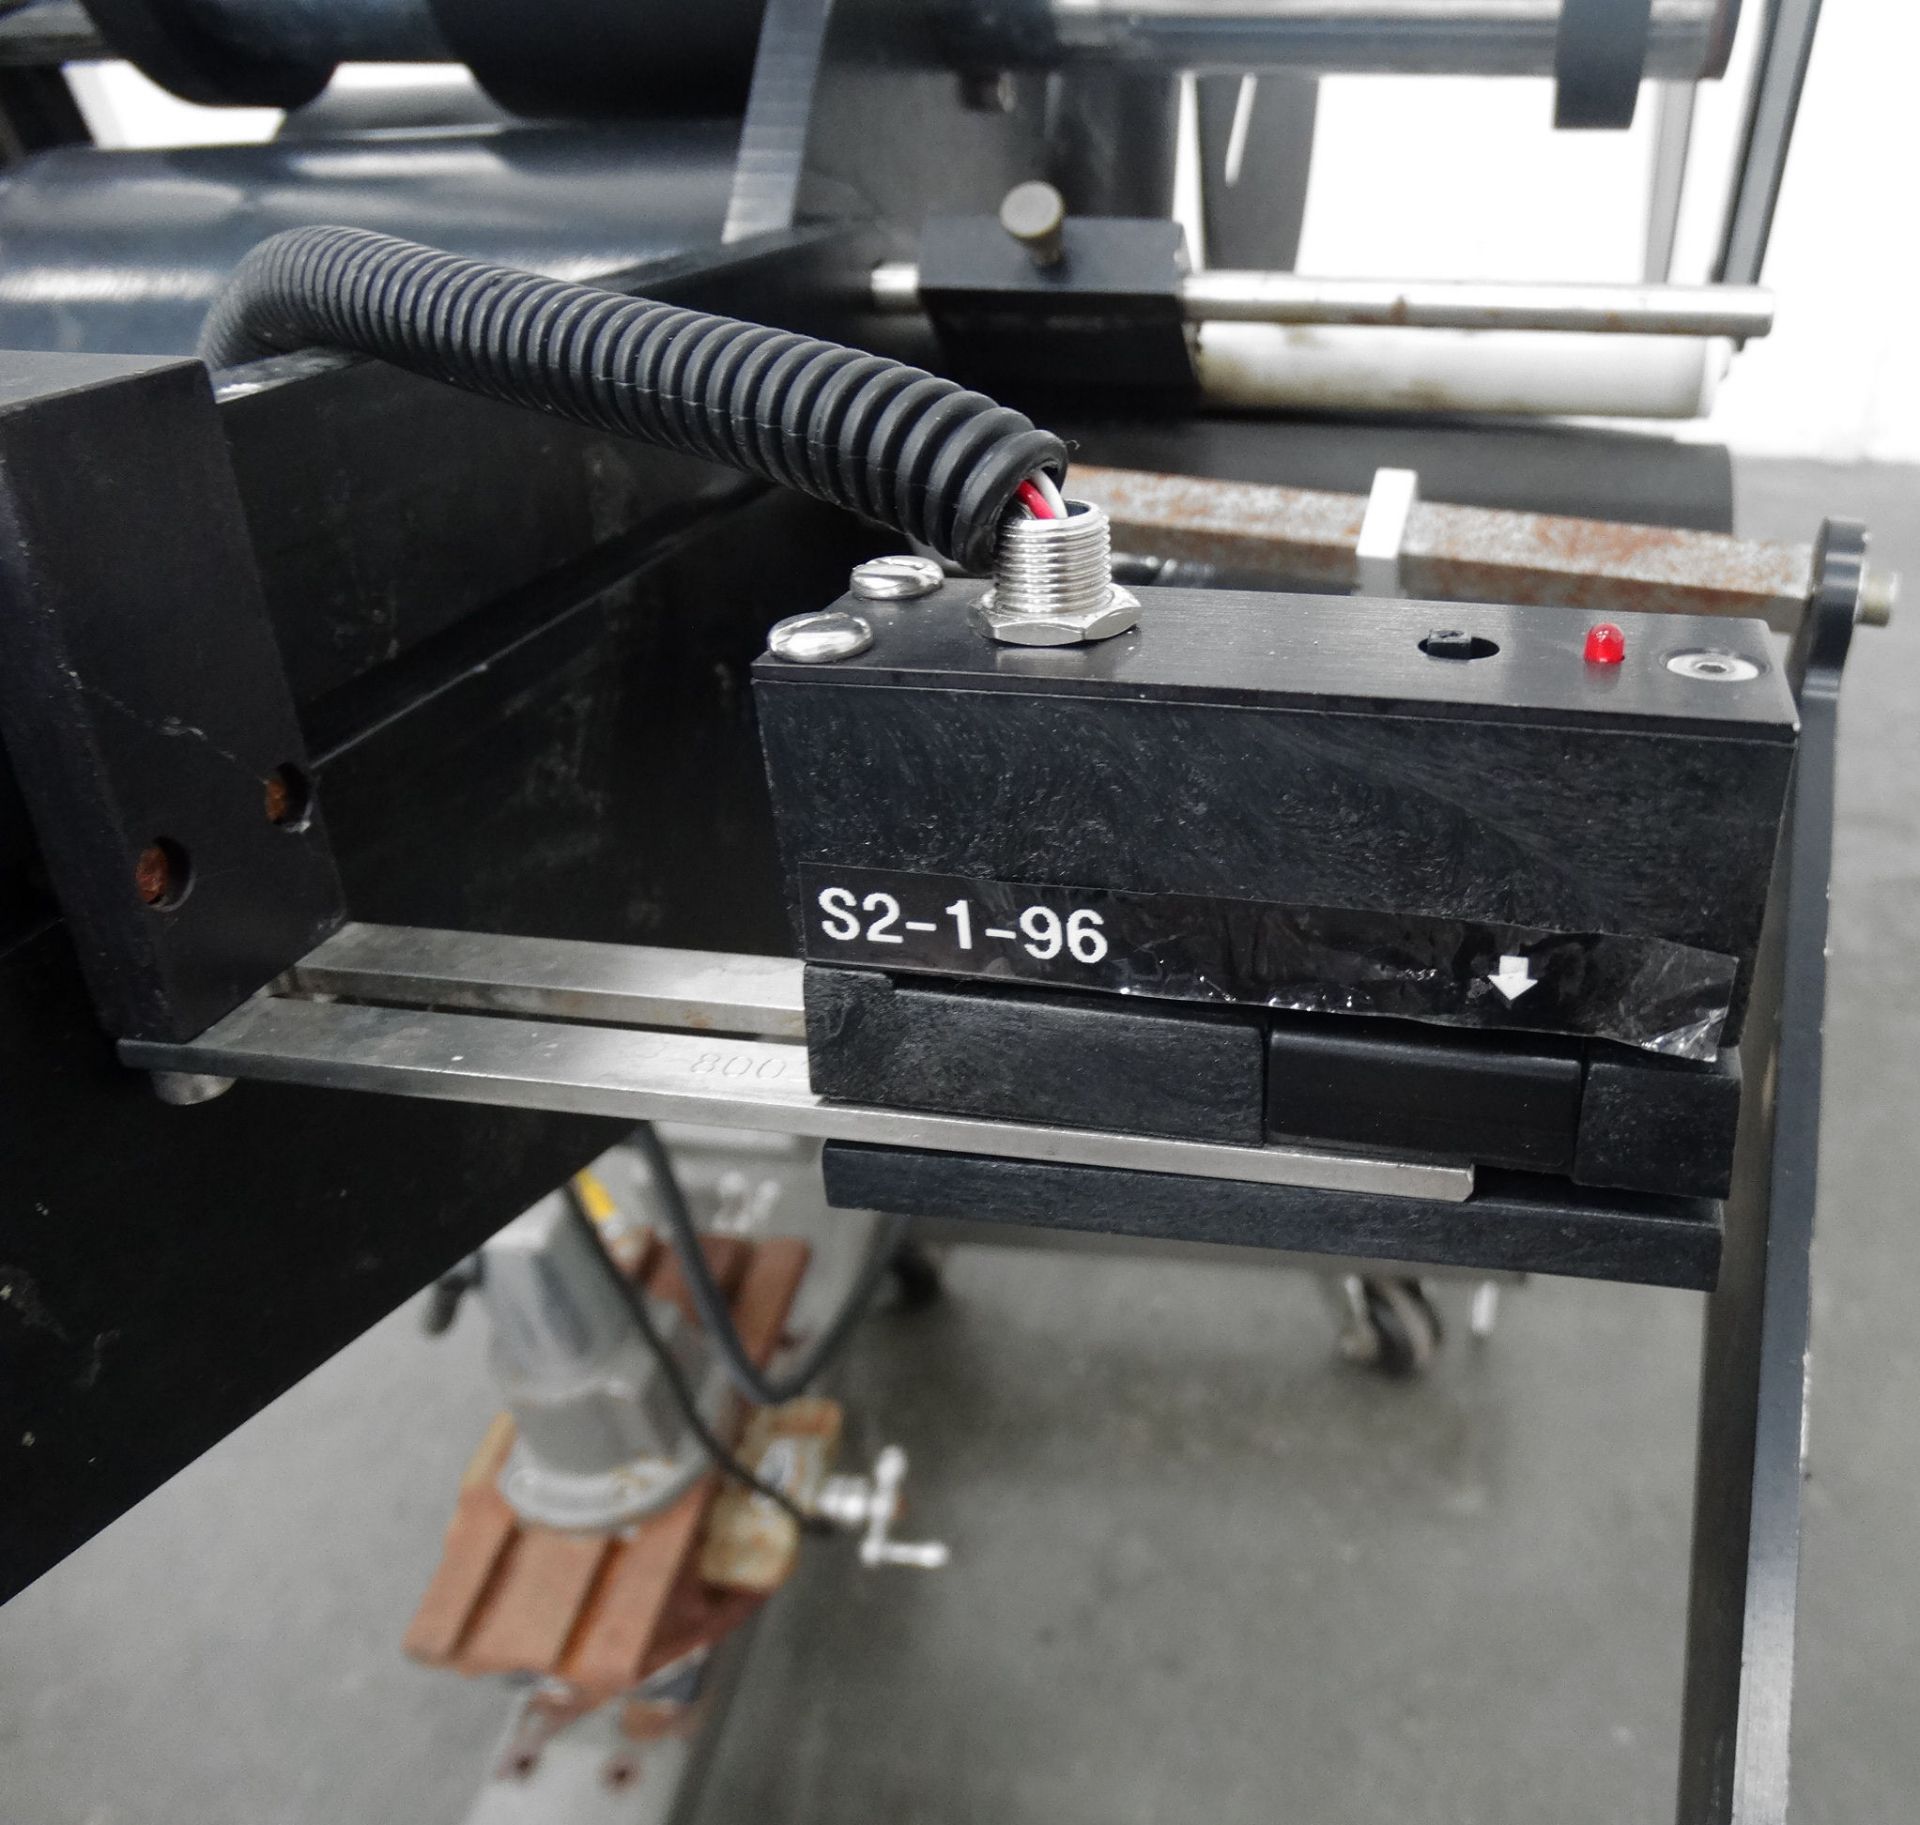 Accraply 500H0P Pressure Sensitive Labeler B5290 - Image 8 of 11